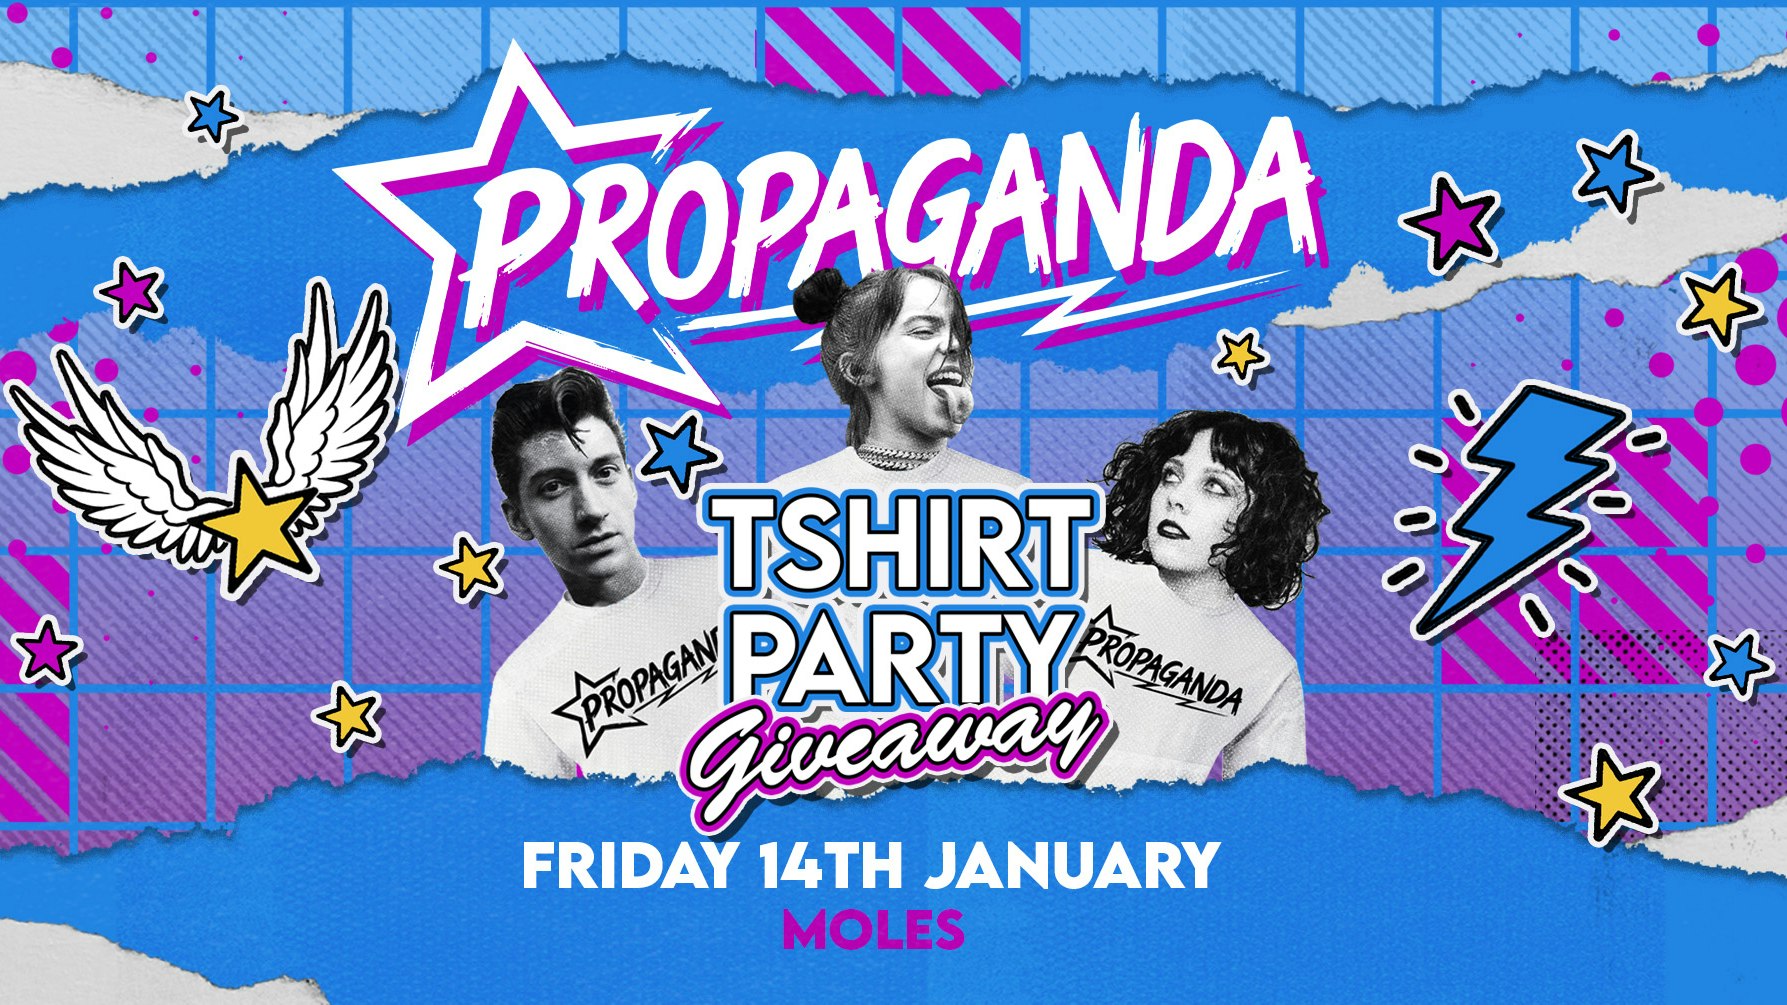 Propaganda Bath – T-shirt Giveaway Party!